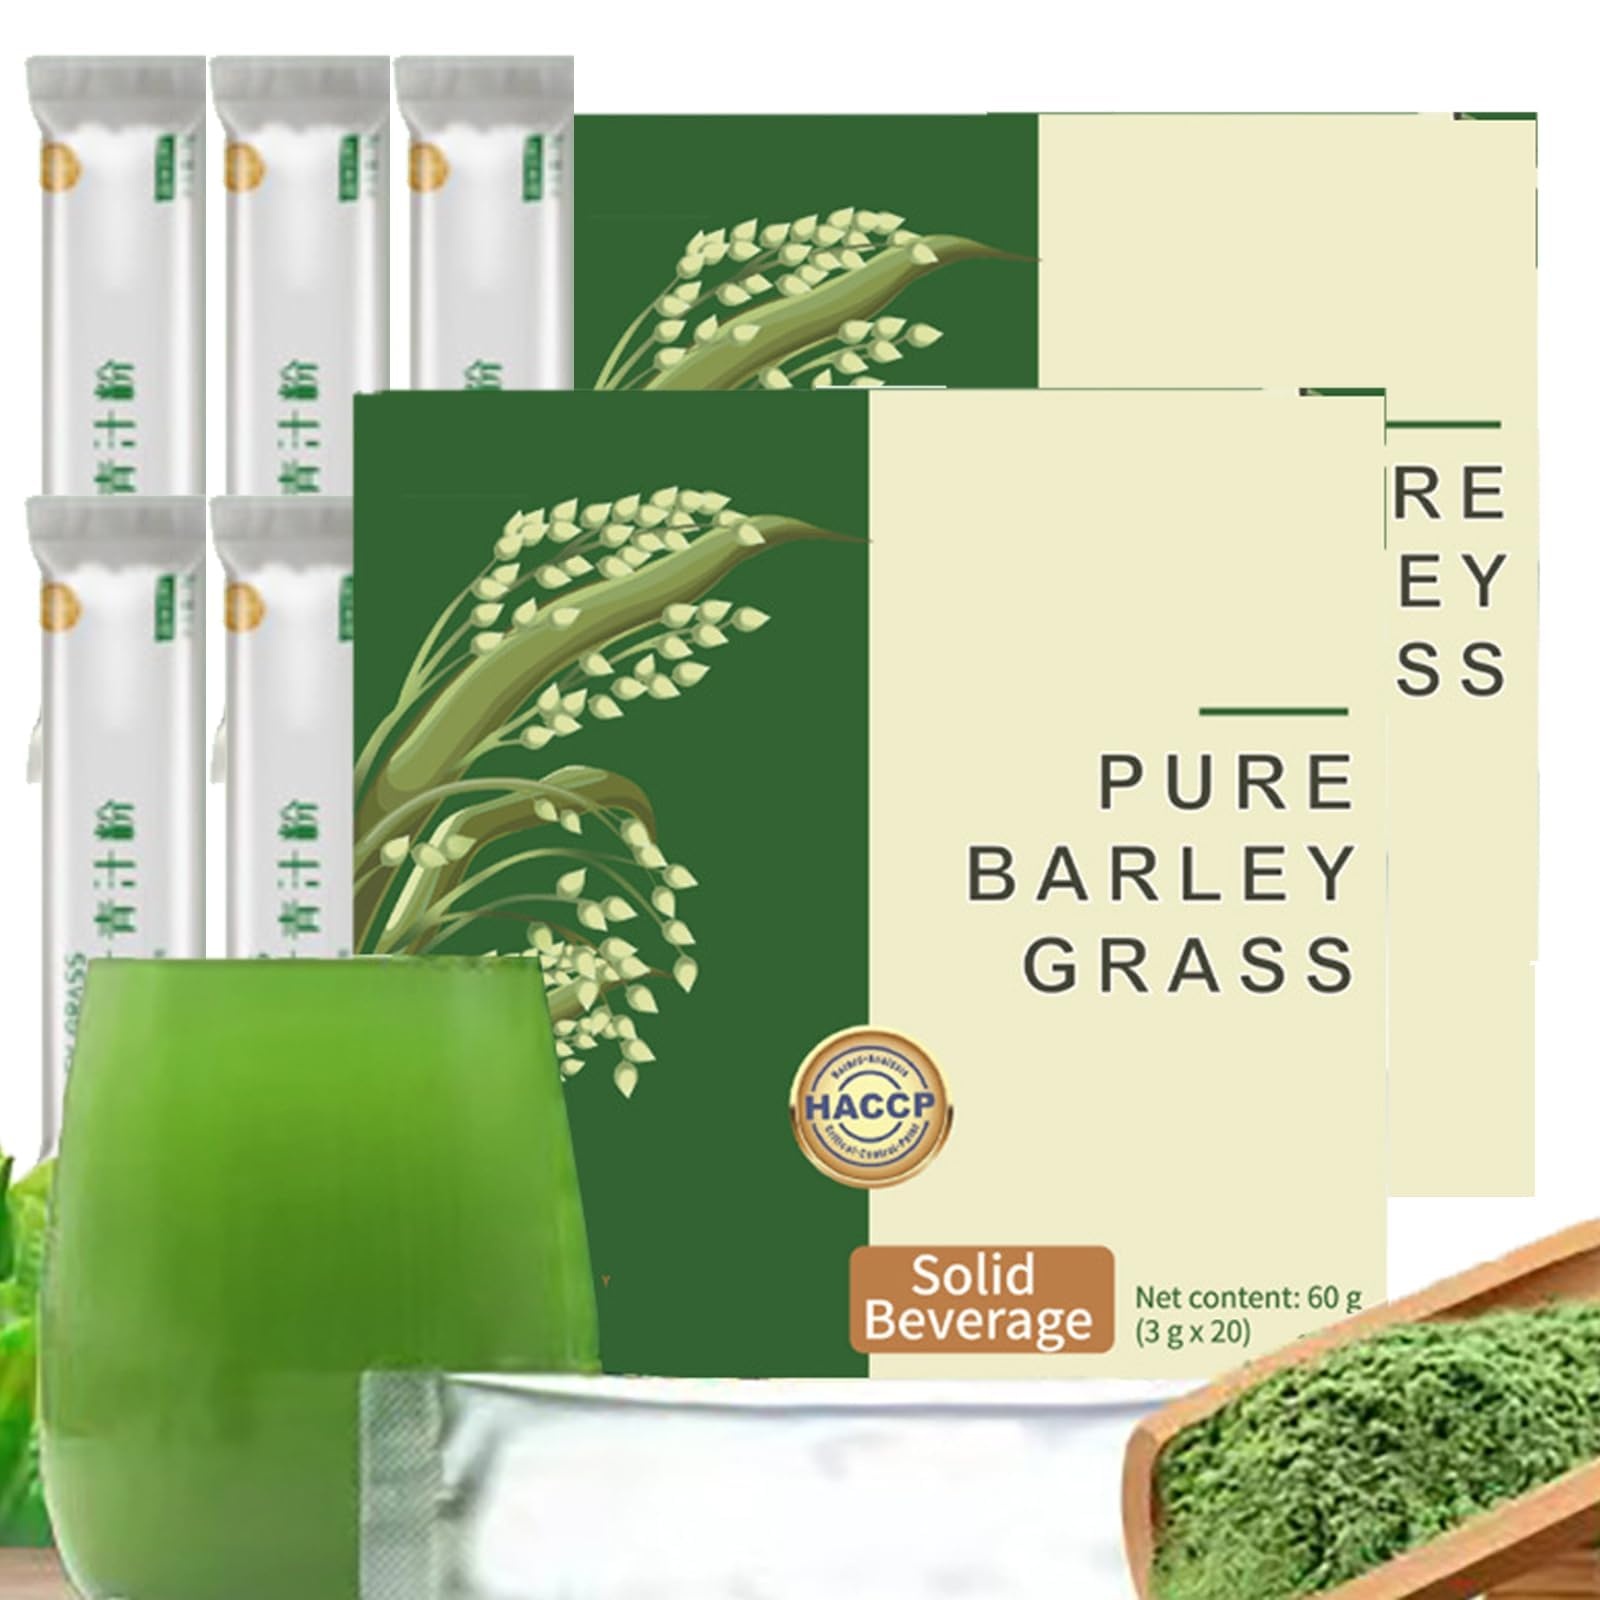 2 Box Naveta Barley Grass Powder 100% Pure & Organic, Organic Barley Grass Powder, Easy to Use and Carry, for Men Women Body Shaping